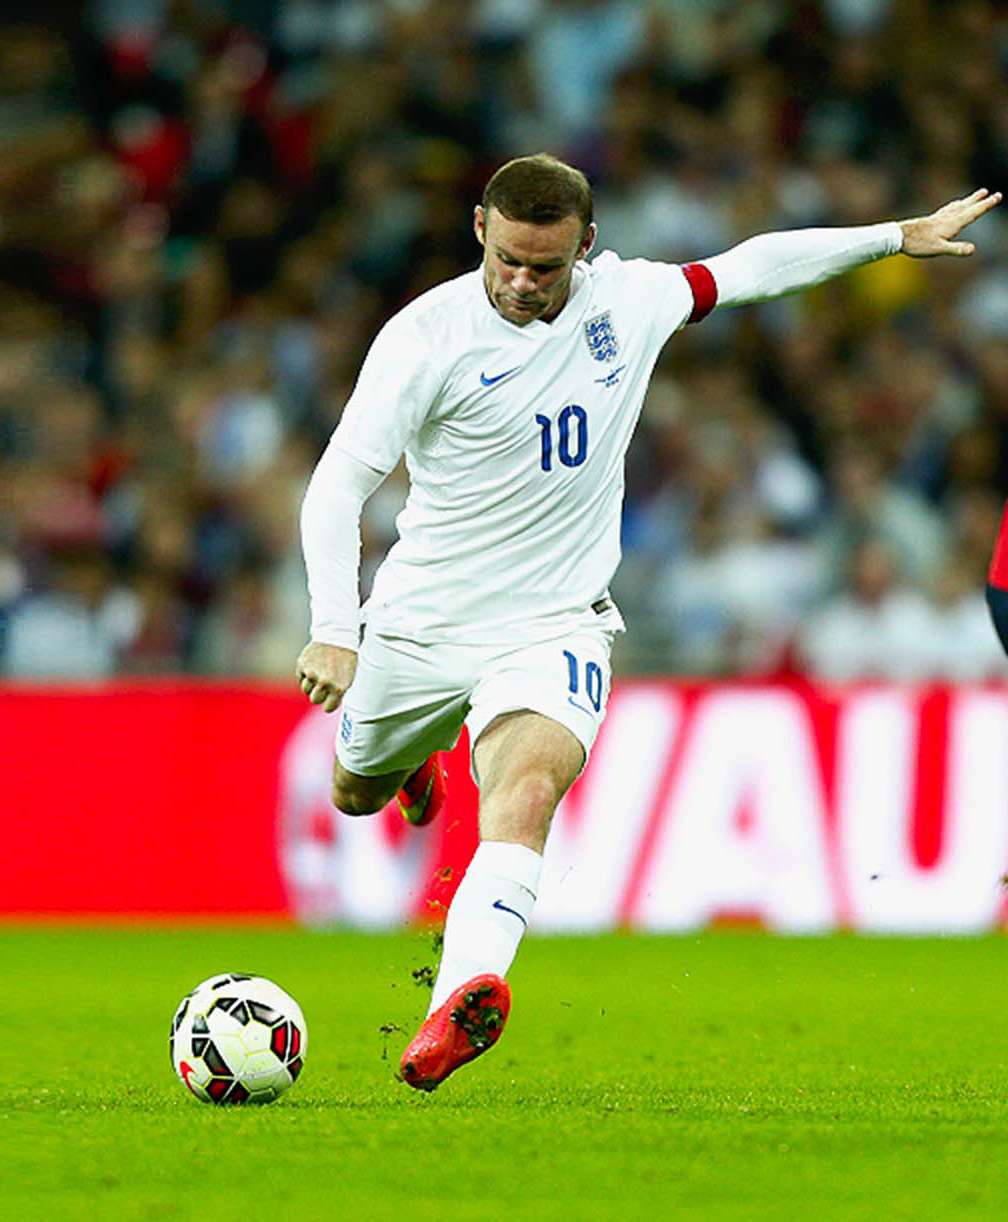 Wayne Rooney goes to kick the ball